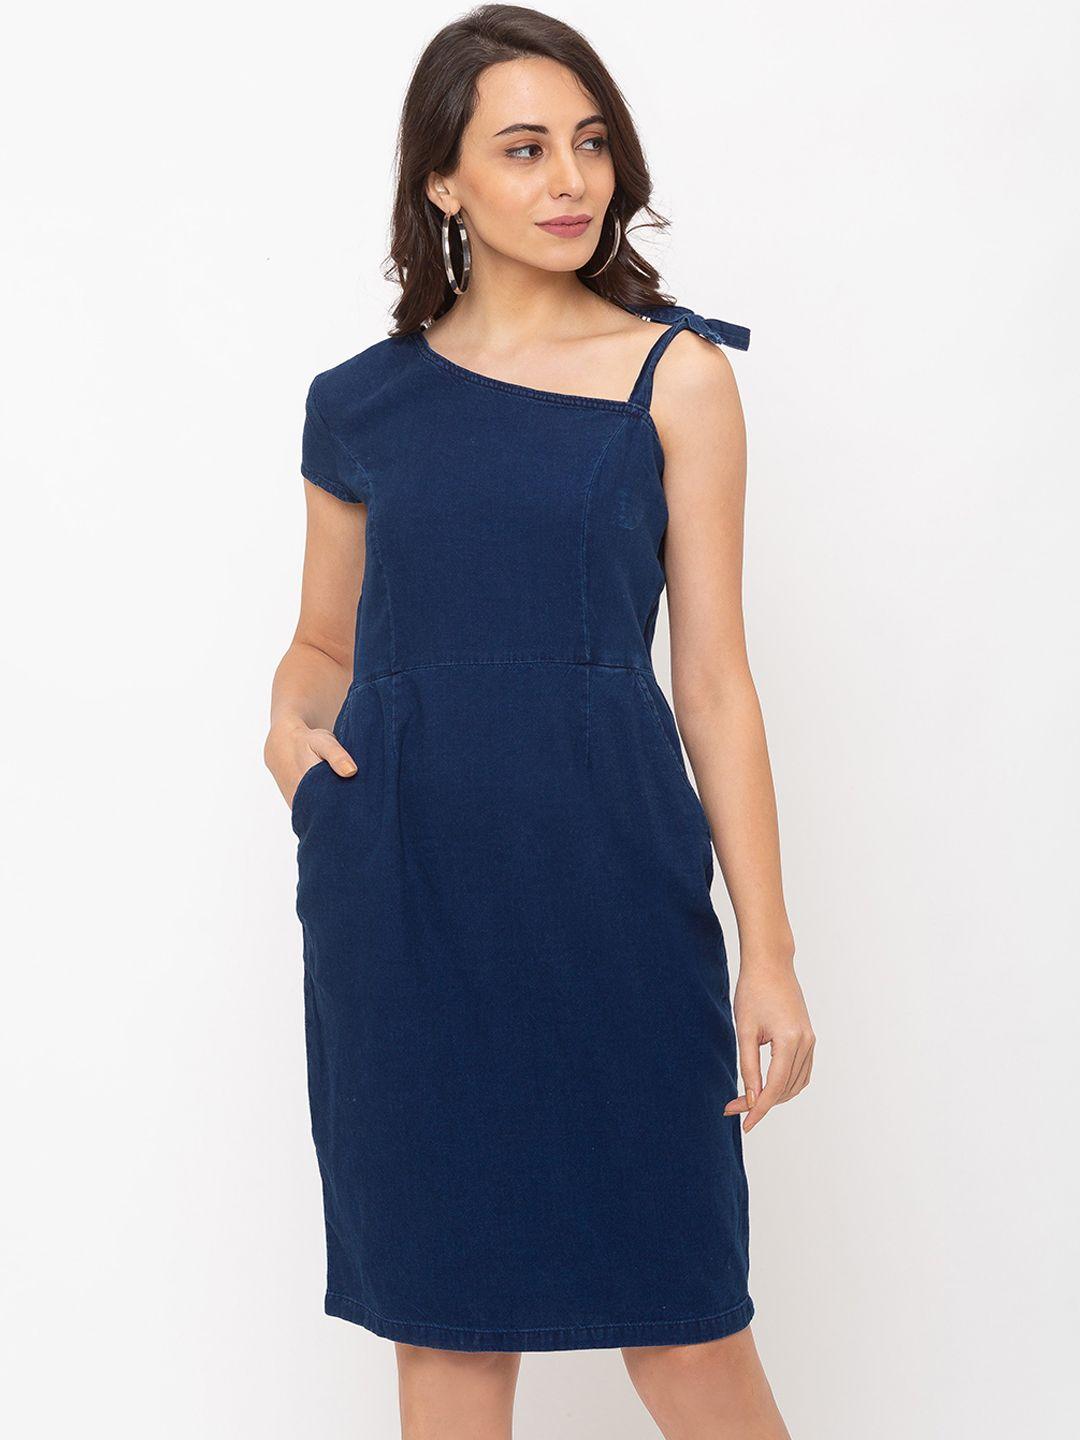 globus women navy blue solid one shoulder sheath dress